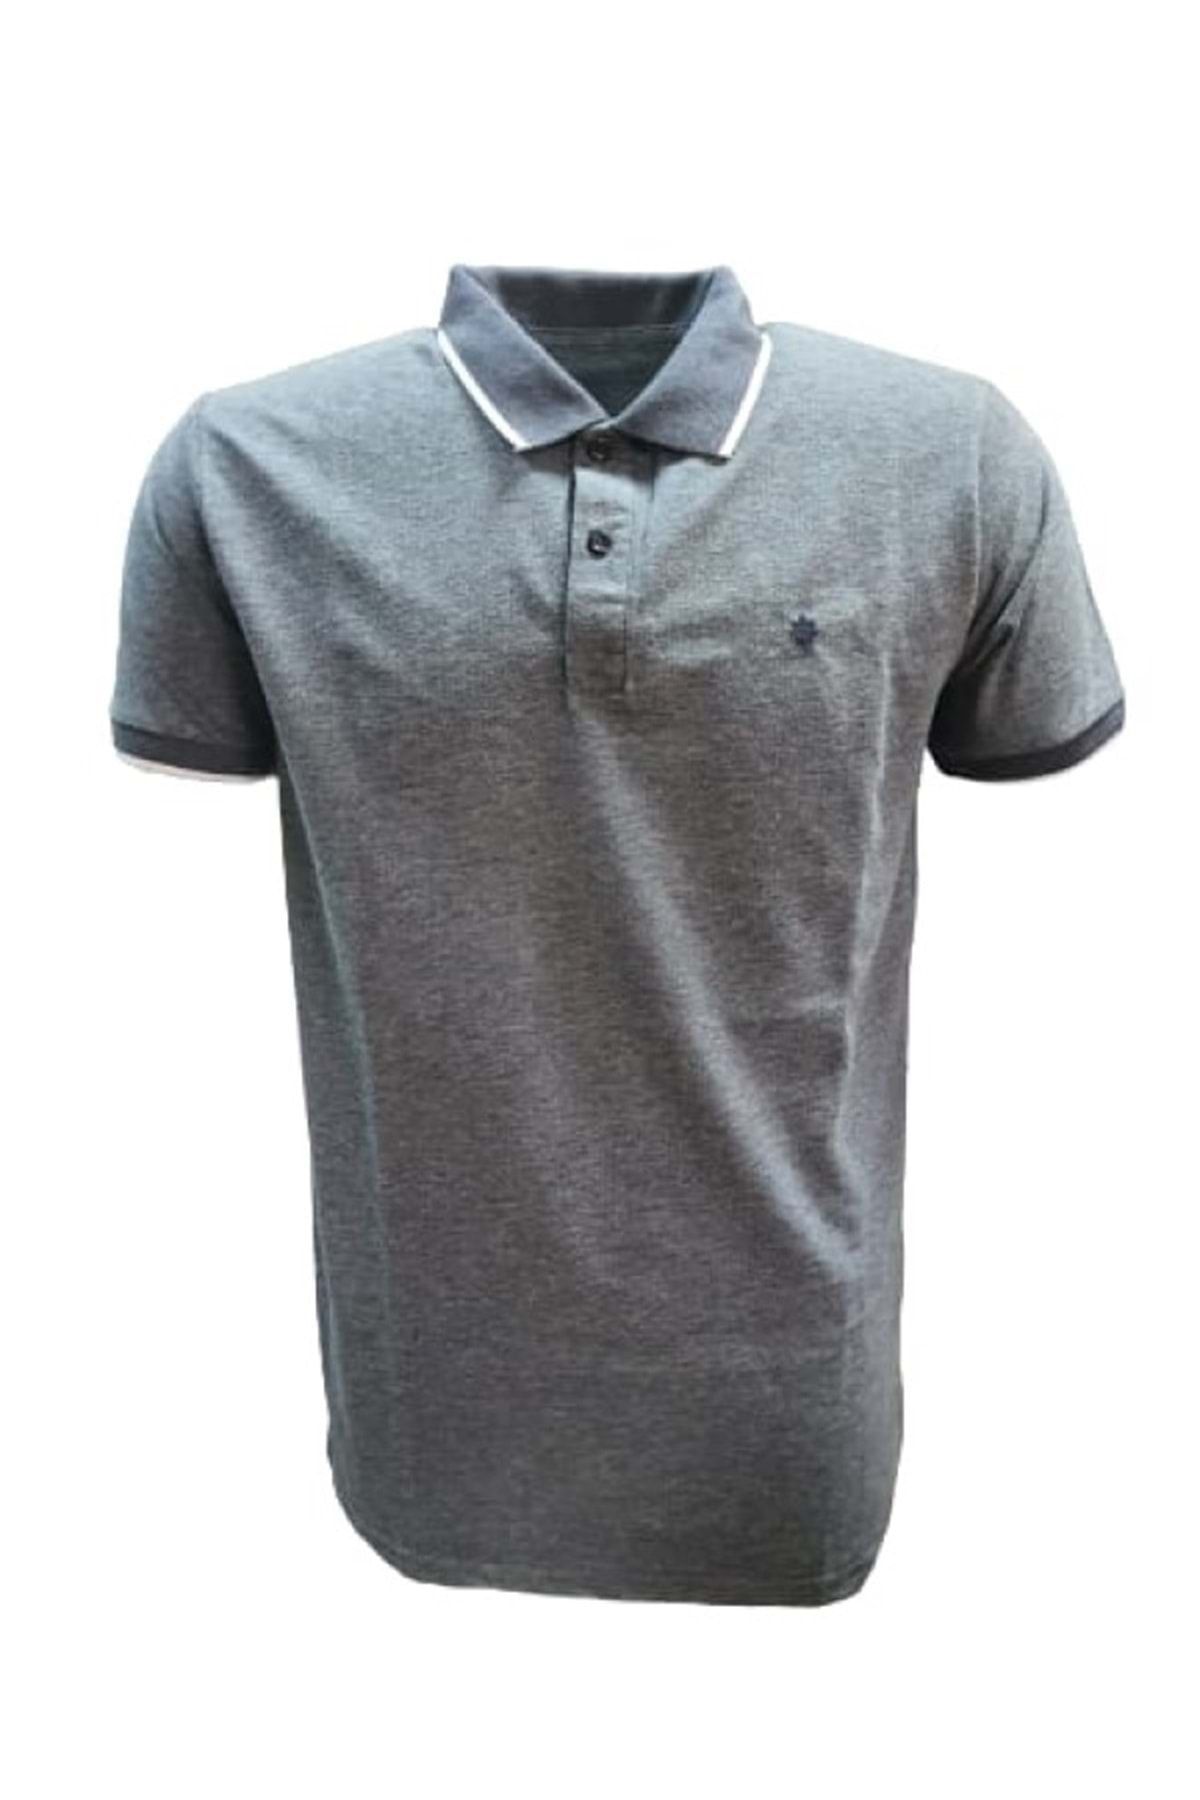 Dynamo Erkek Lakos Likralı Polo Yaka Kısa Kol T-shirt T-621 - Lacivert - L